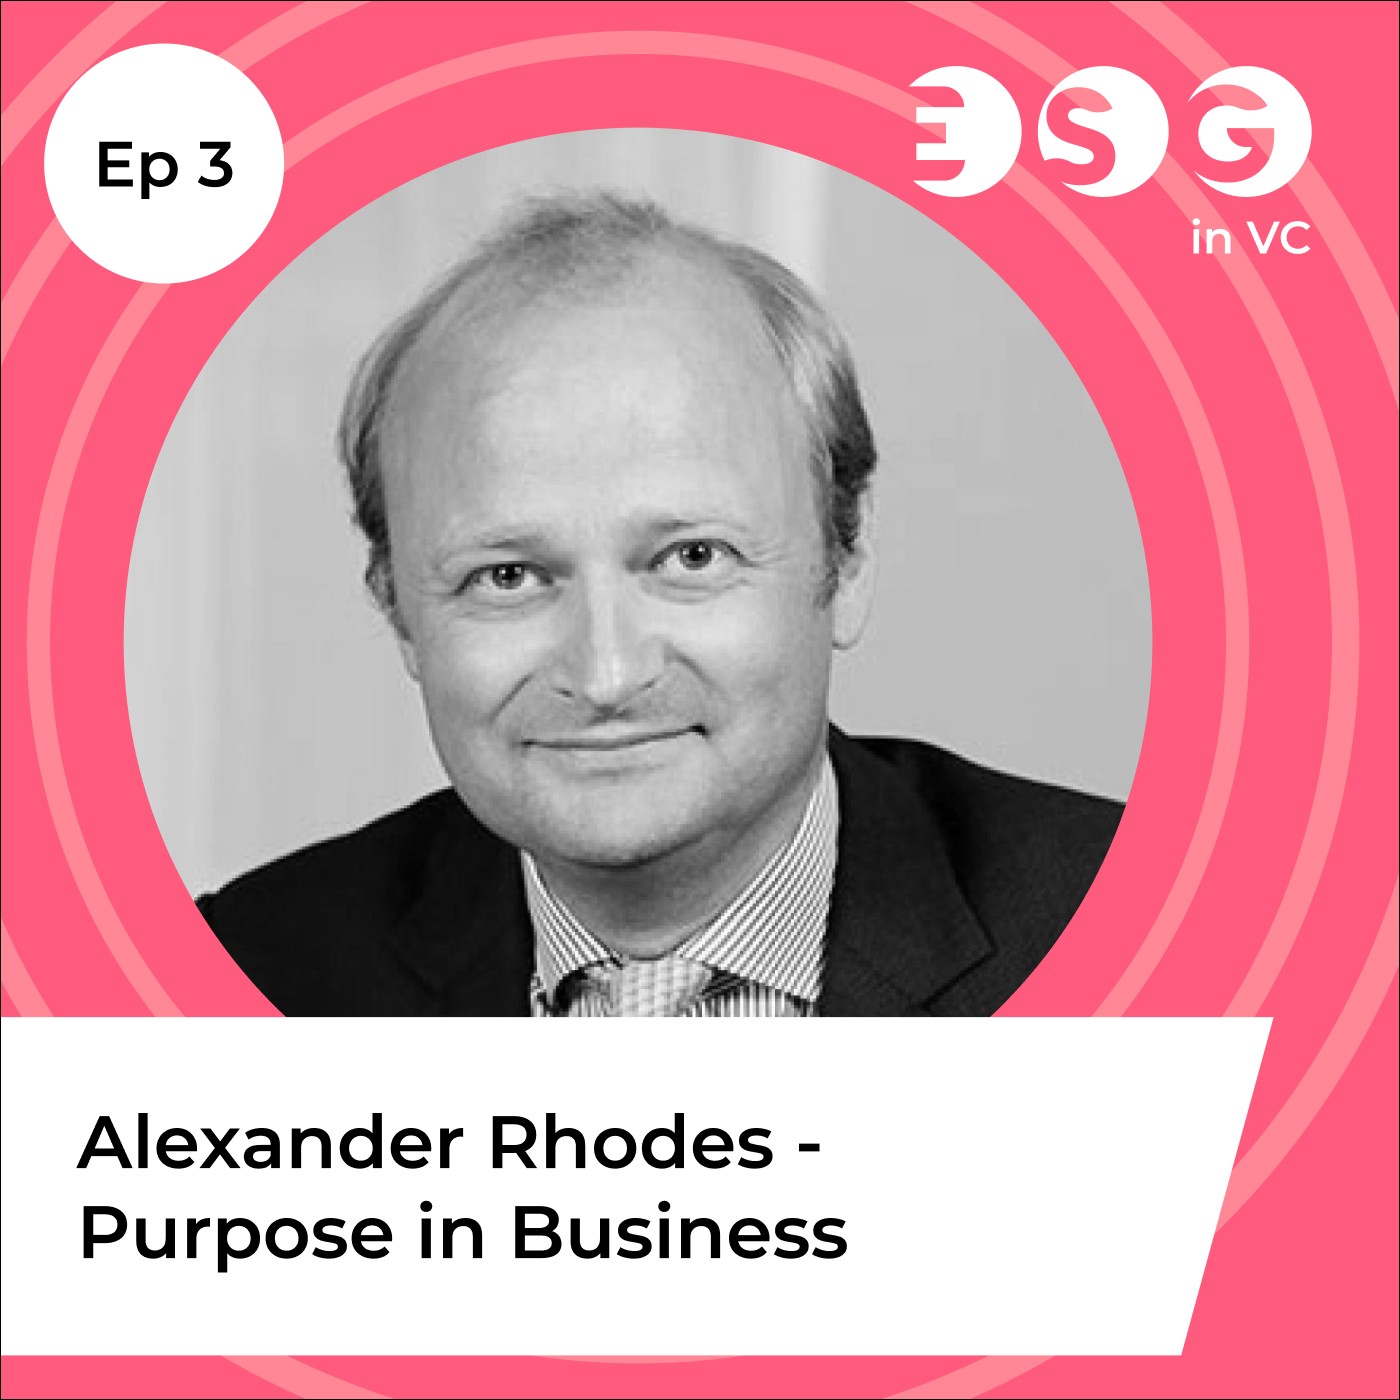 Ep 3 - Alexander Rhodes - Purpose in Business